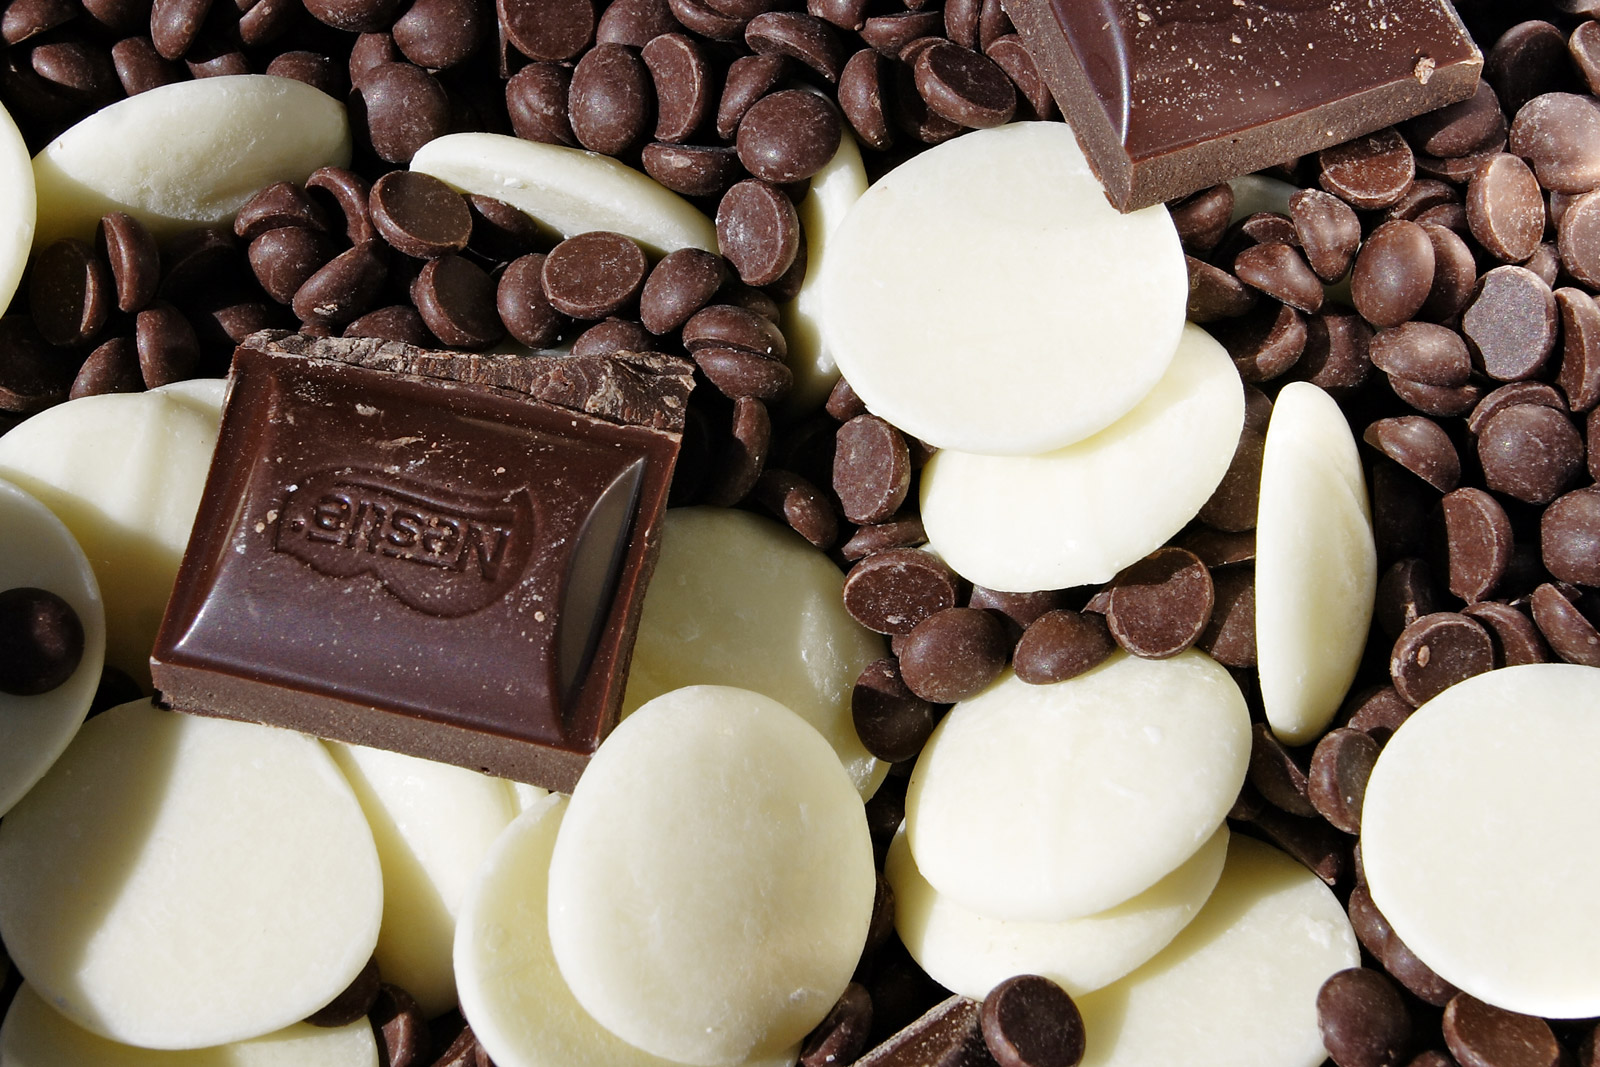 Fichier: Différents types de chocolat.jpg - Wikimedia Commons